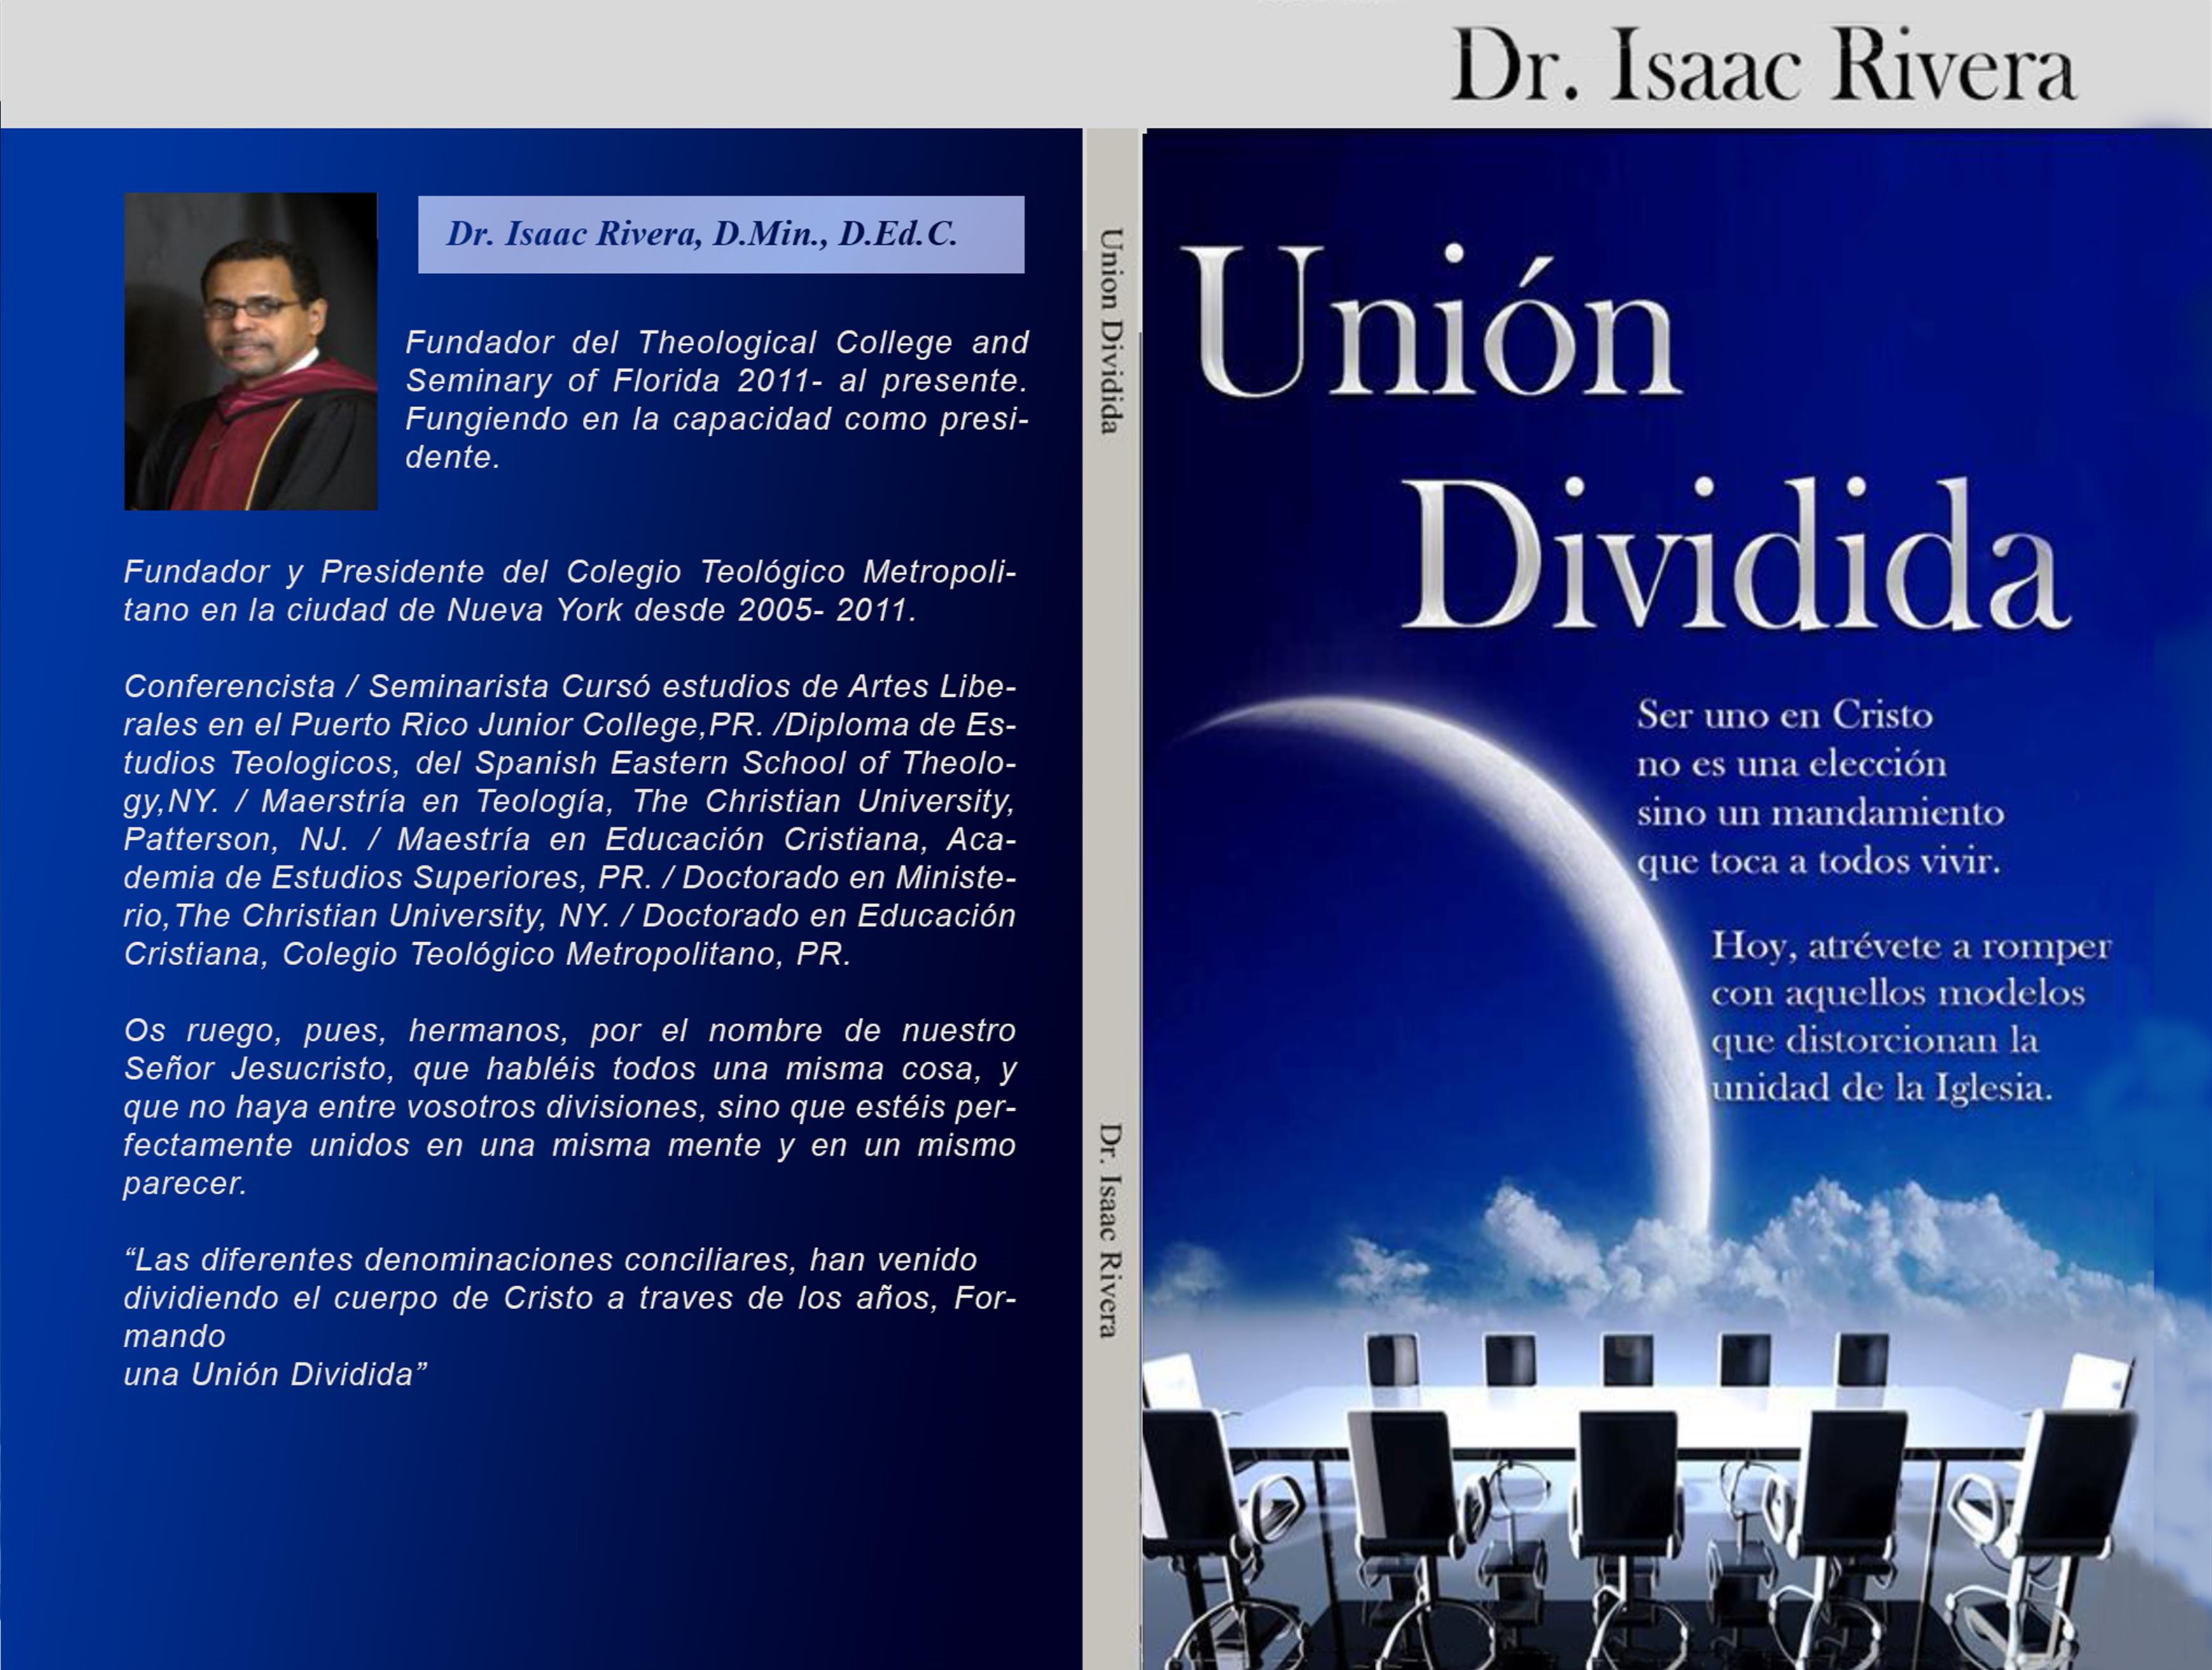 Union Dividida cover image